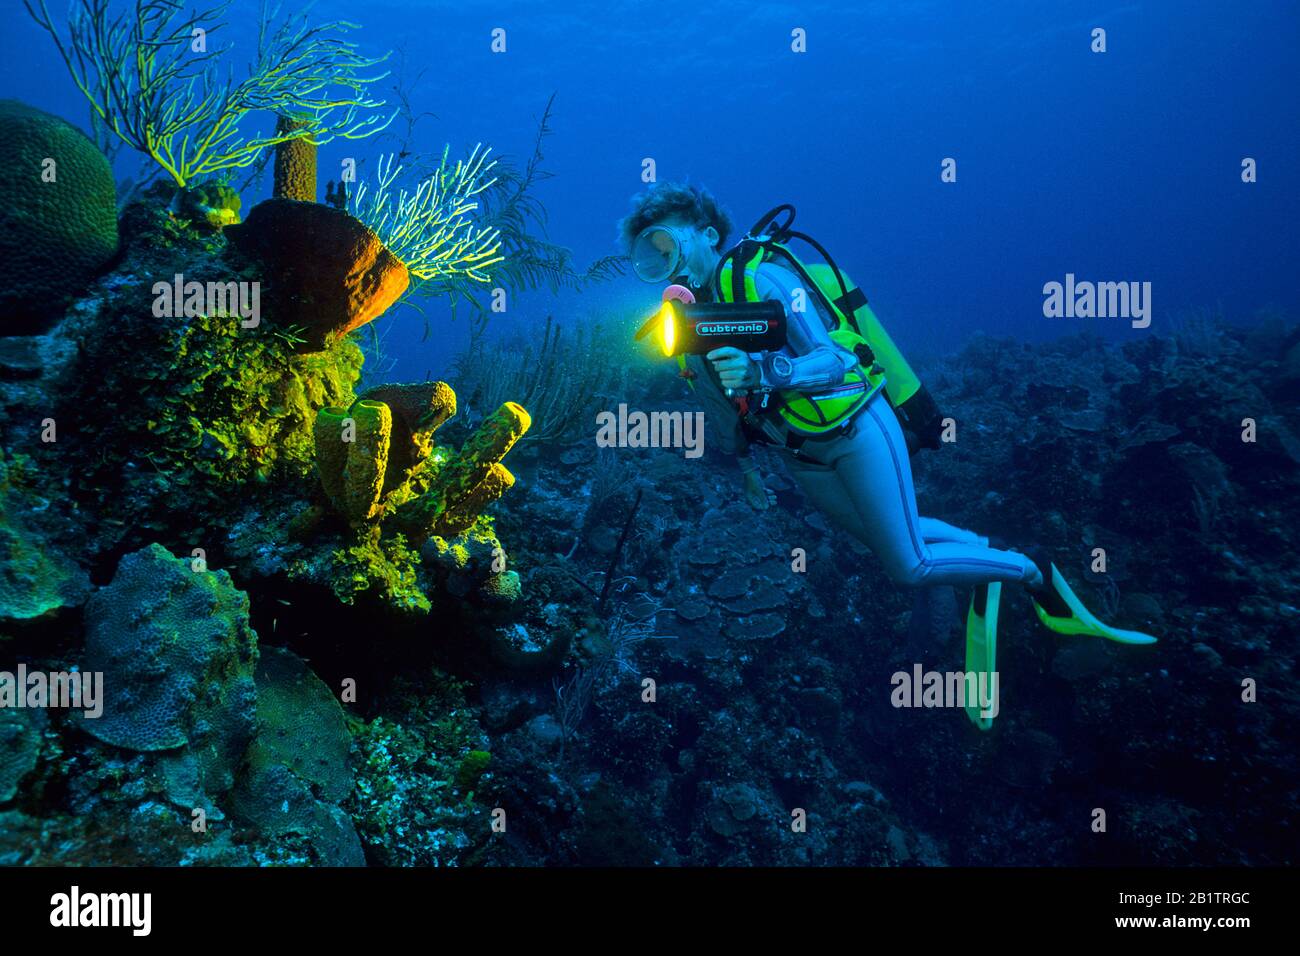 Scuba diver shine a light on various sponges at a coral reef, Isla de Juventud, Cuba Stock Photo